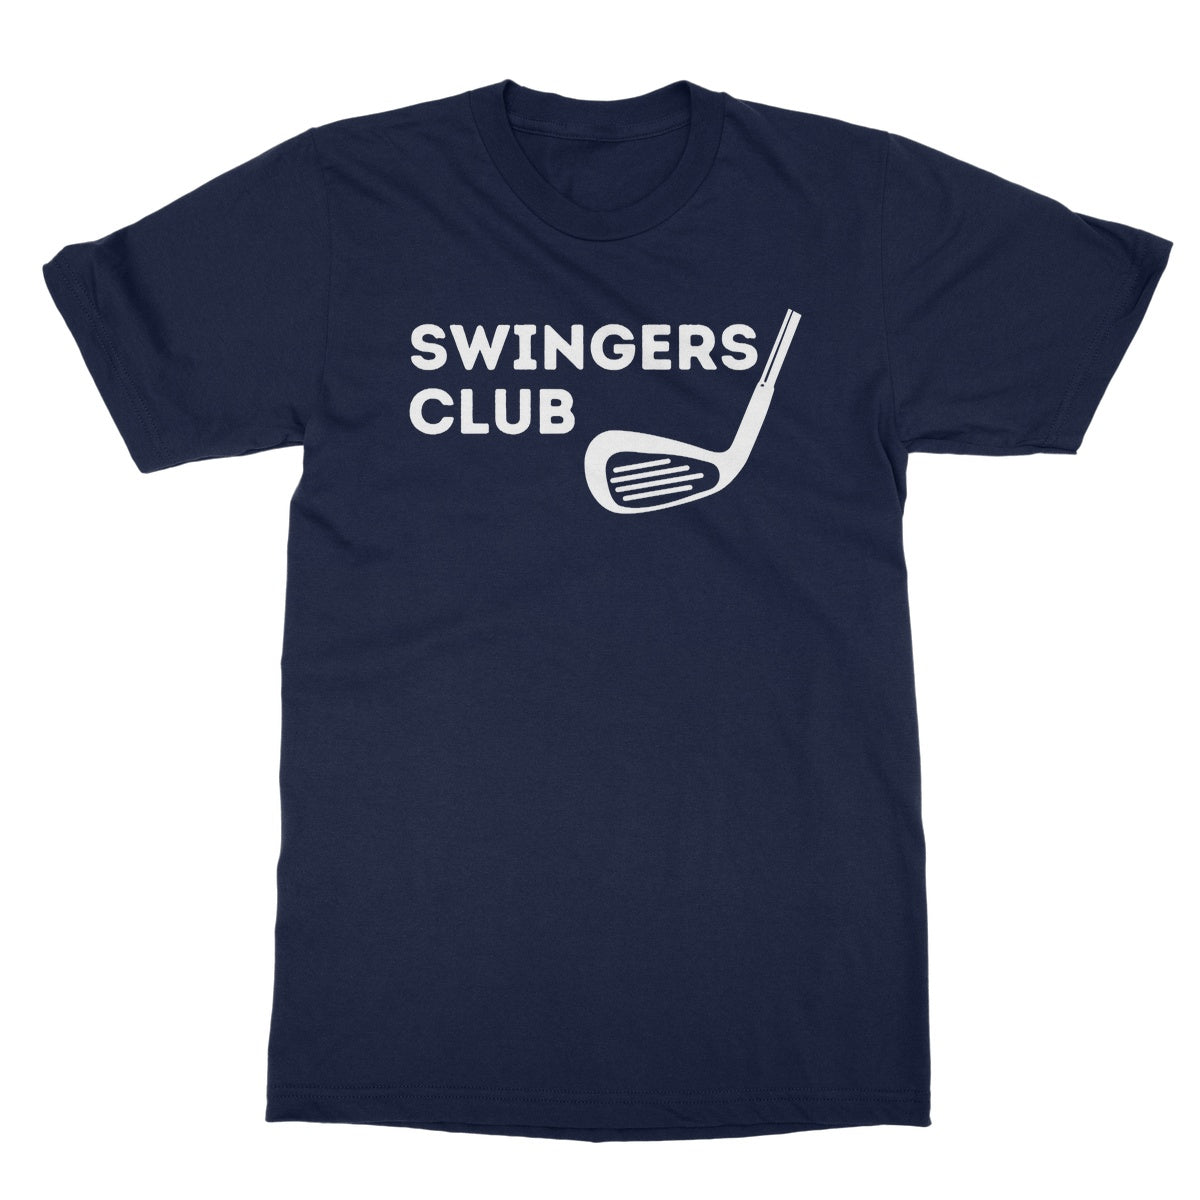 swingers club t shirt navy